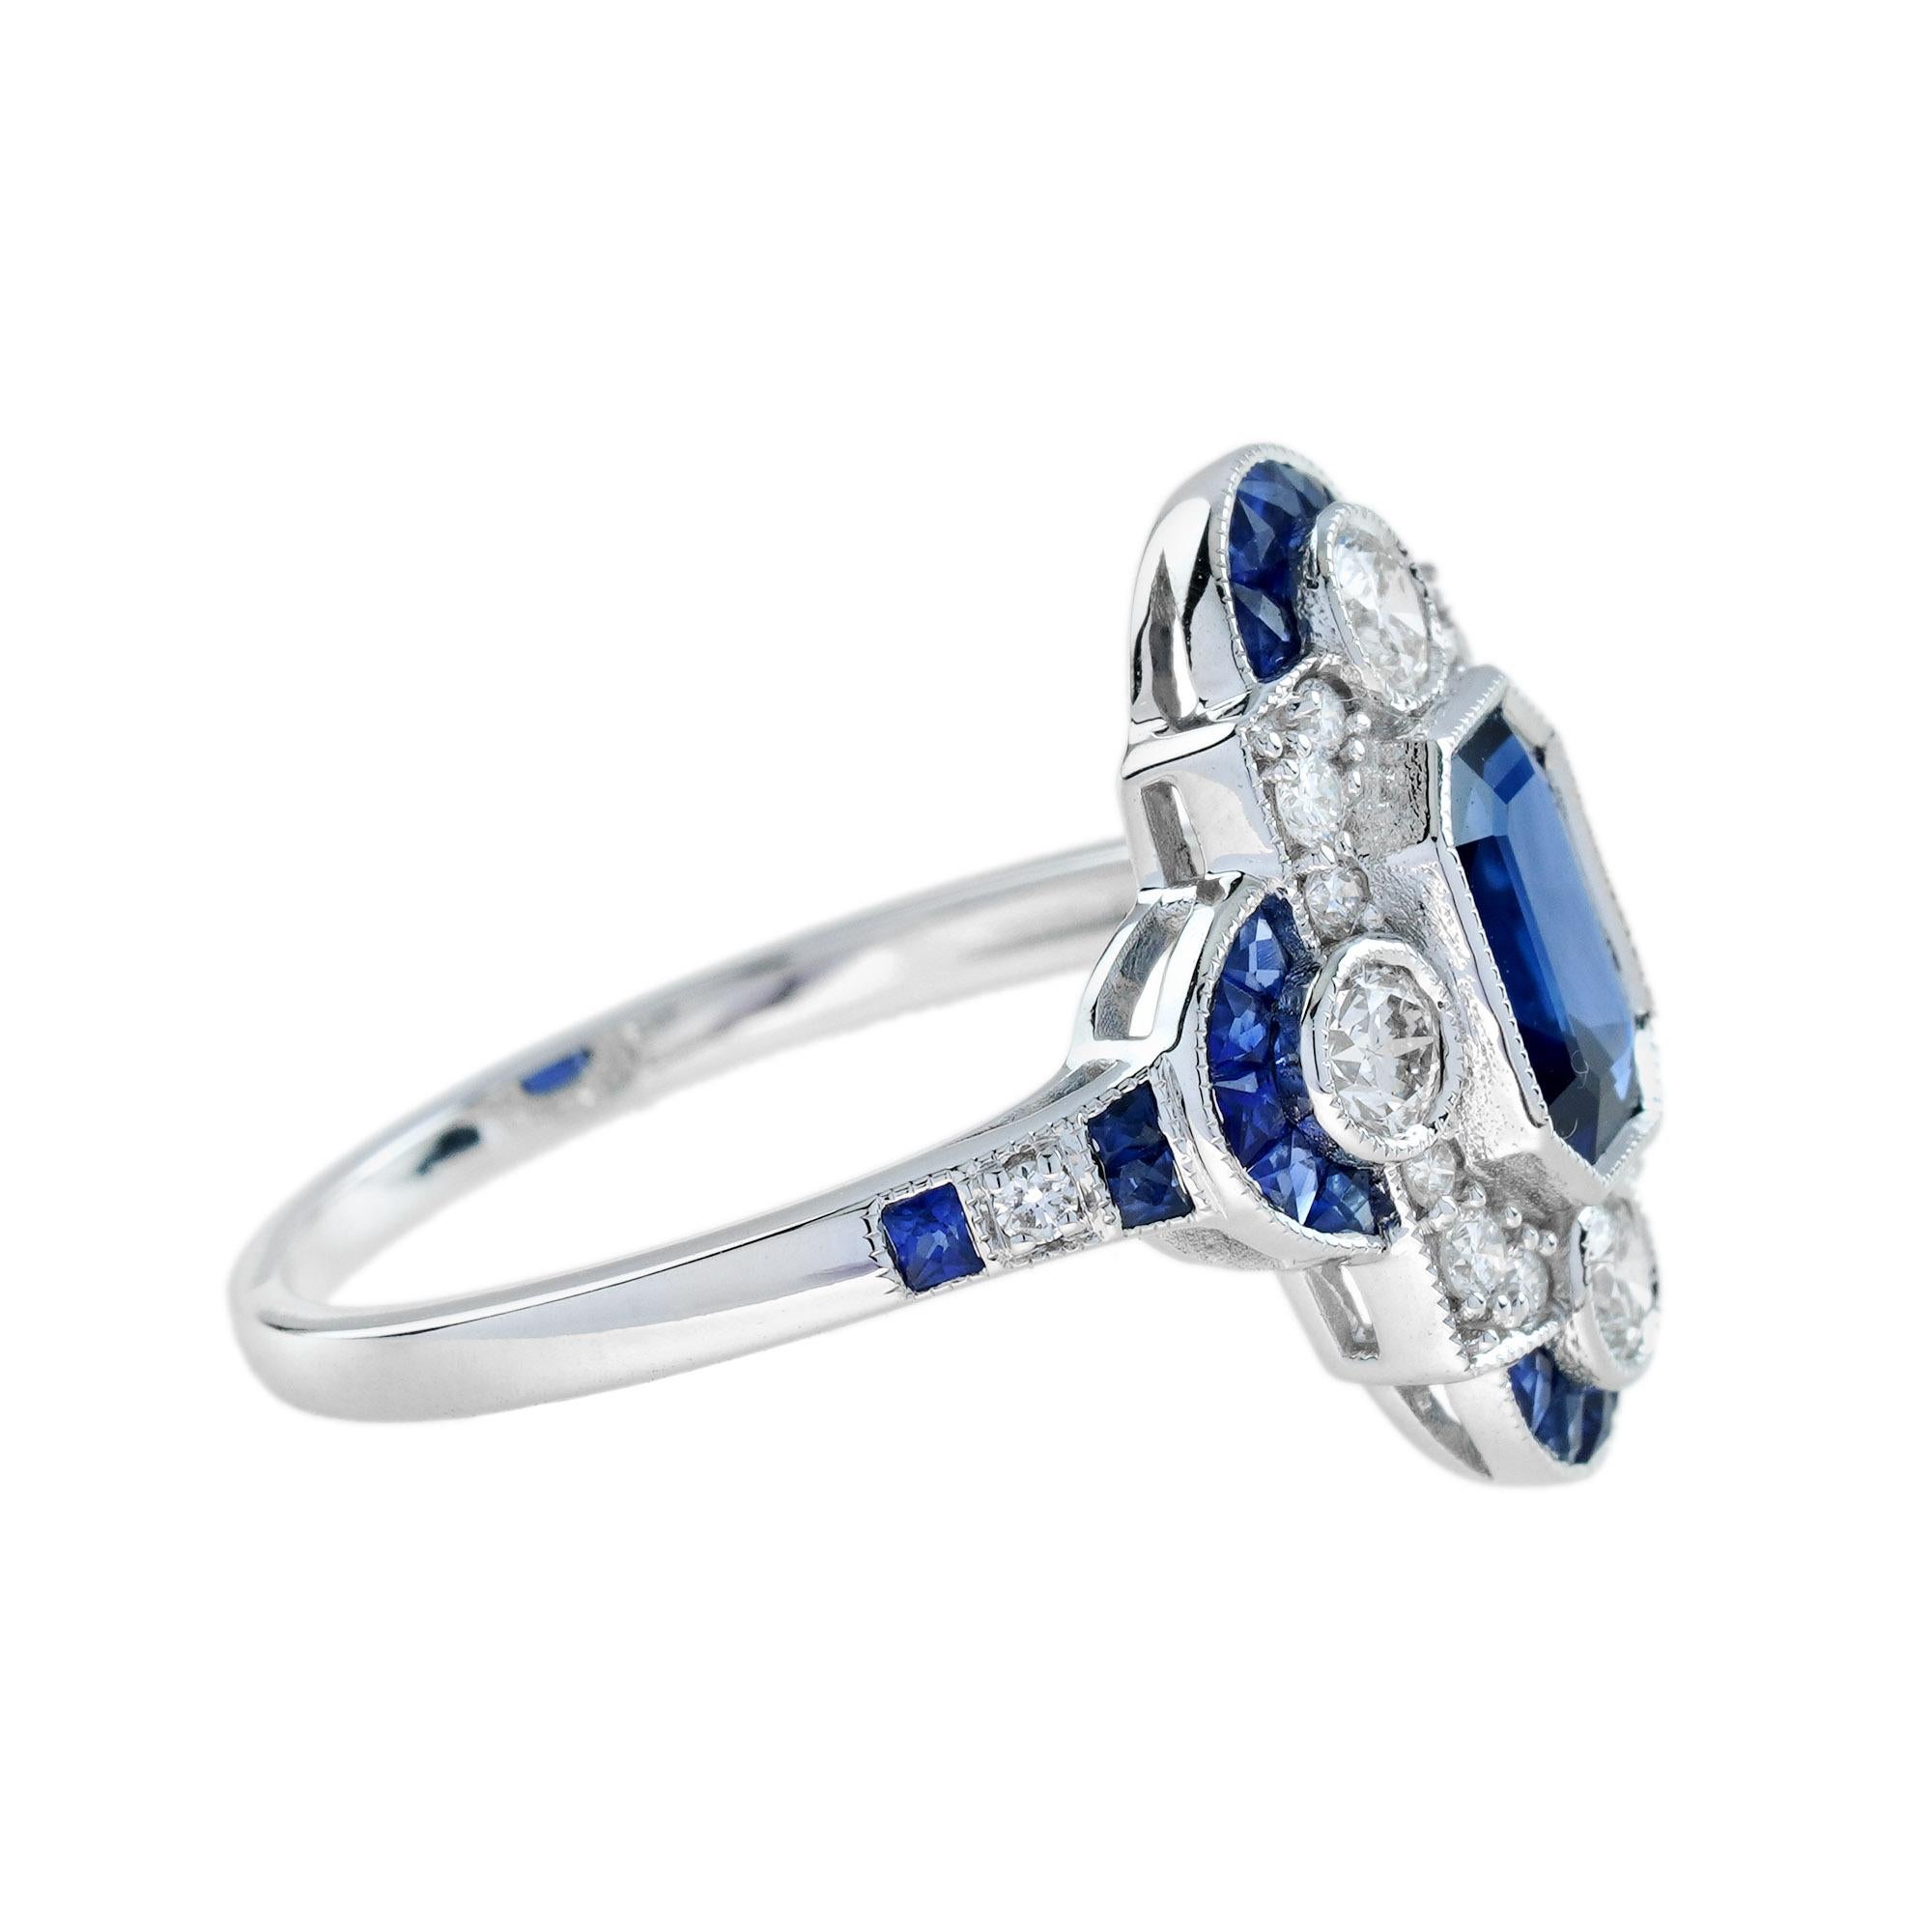 Emerald Cut Ceylon Sapphire and Diamond Art Deco Style Halo Ring in 18K Gold 3